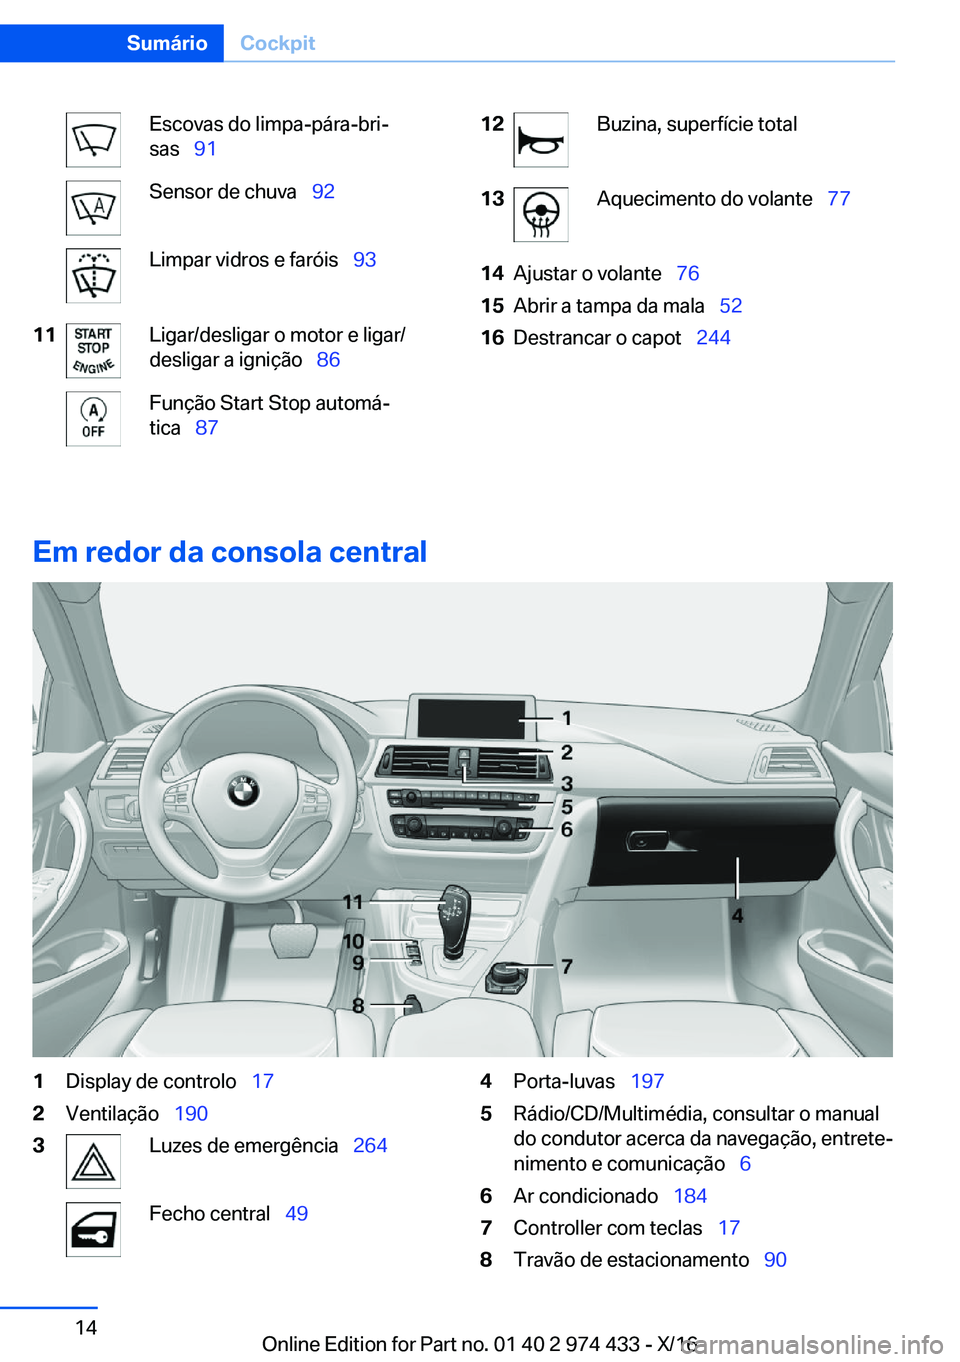 BMW 4 SERIES GRAN COUPE 2017  Manual do condutor (in Portuguese) �E�s�c�o�v�a�s� �d�o� �l�i�m�p�a�-�p�á�r�a�-�b�r�iª
�s�a�s\_ �9�1�S�e�n�s�o�r� �d�e� �c�h�u�v�a\_ �9�2�L�i�m�p�a�r� �v�i�d�r�o�s� �e� �f�a�r�ó�i�s\_ �9�3�1�1�L�i�g�a�r�/�d�e�s�l�i�g�a�r� �o�